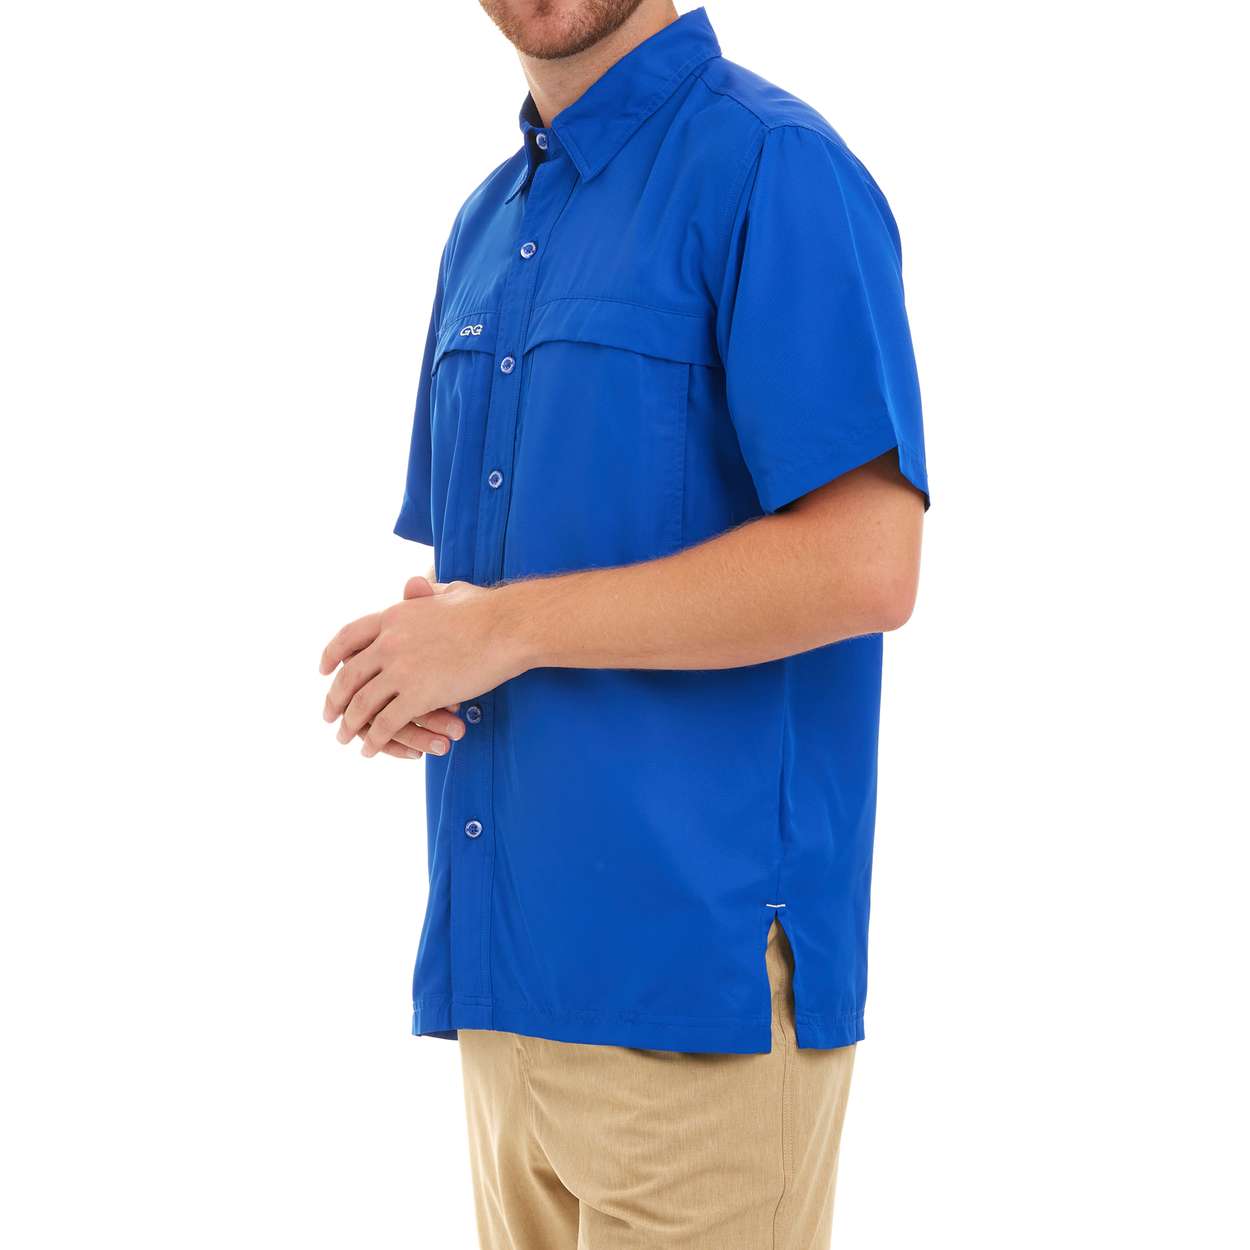 GameGuard Microfiber Long-Sleeve Shirt - Men's - 10390475